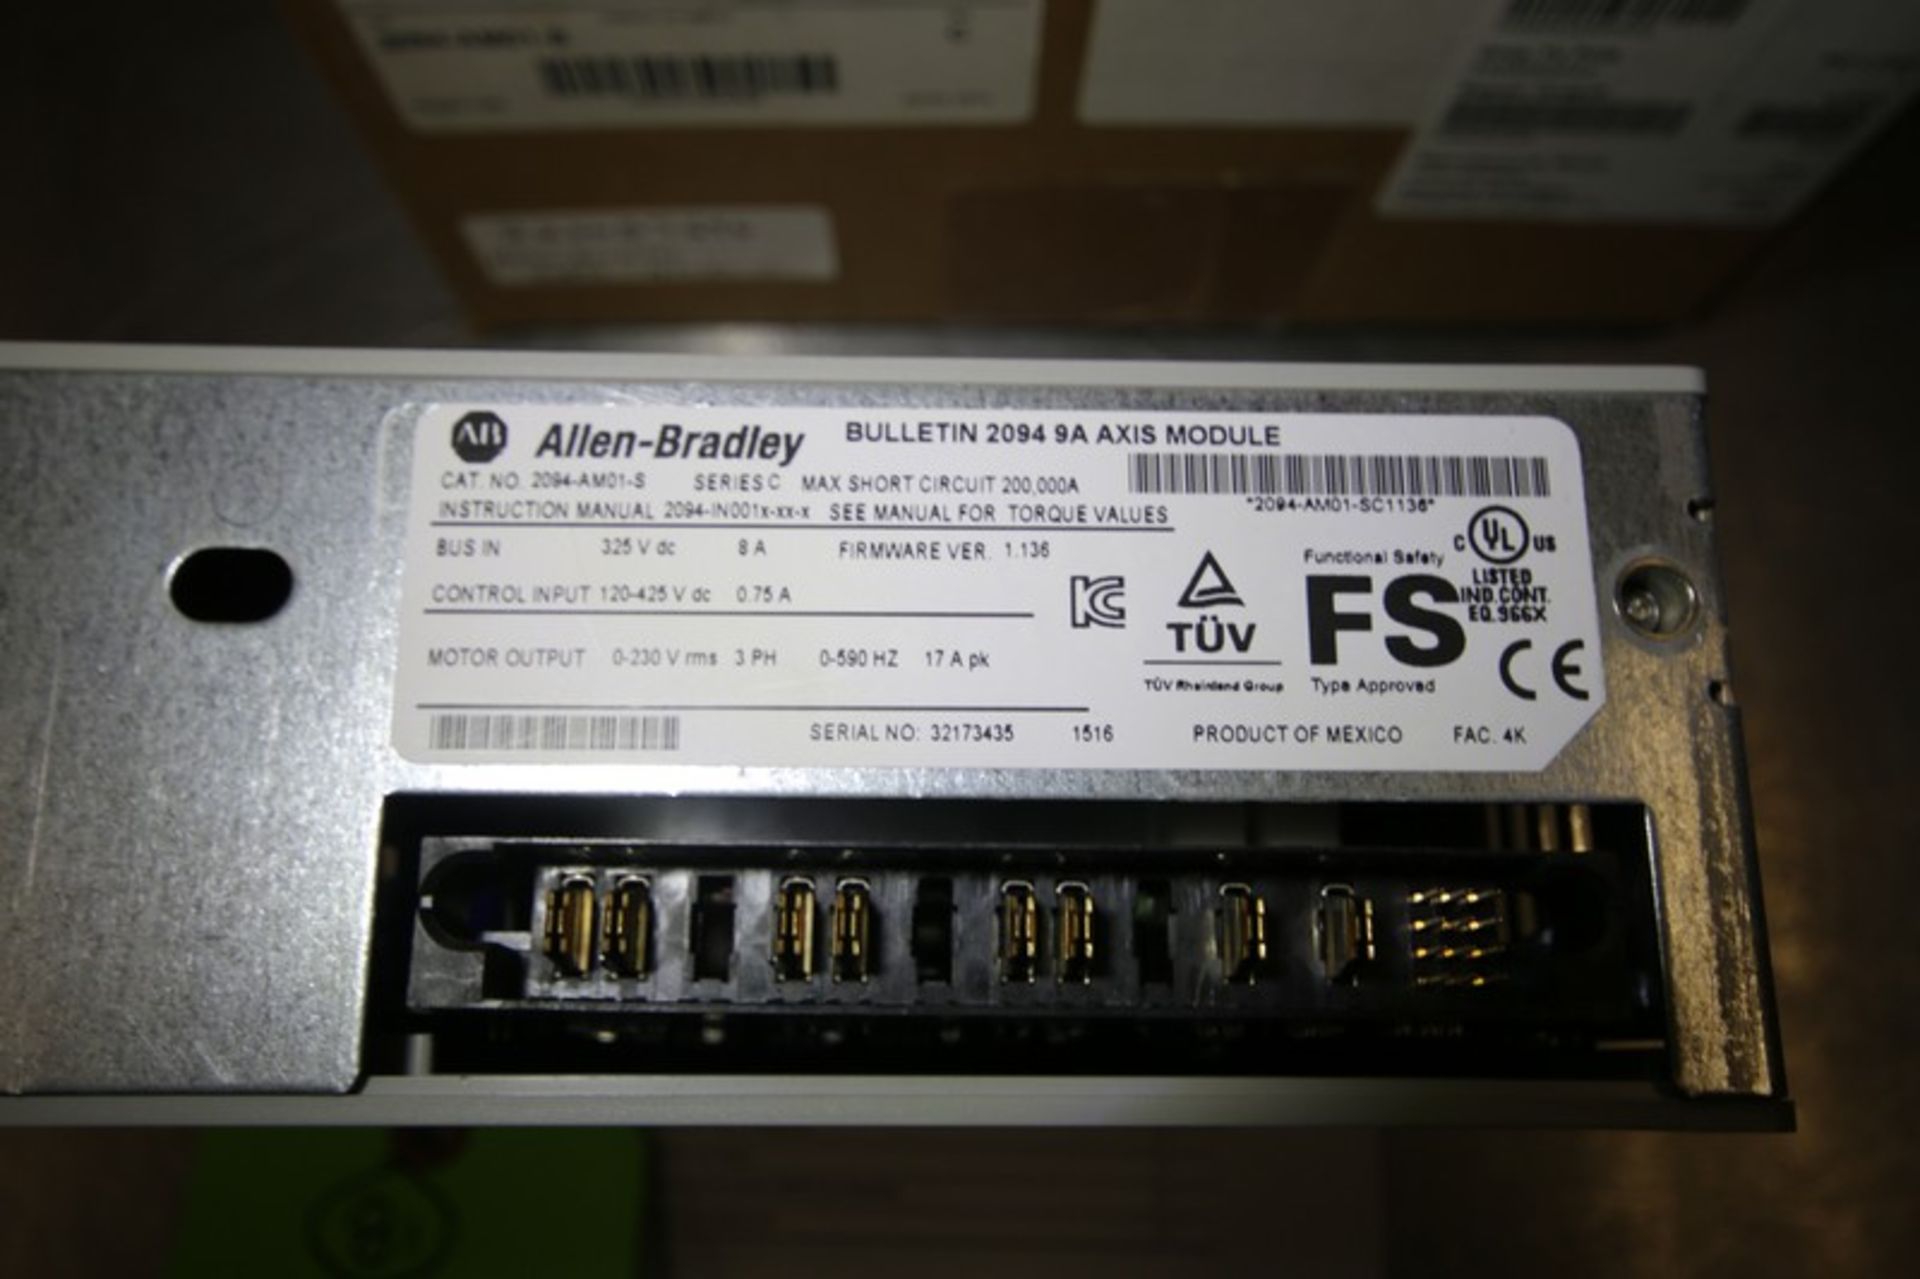 Allen Bradley Kinetix 6000 Servo Drive Axis Module Cat. No. 2094-AM01-S Series C, 200/230V (INV# - Image 4 of 5